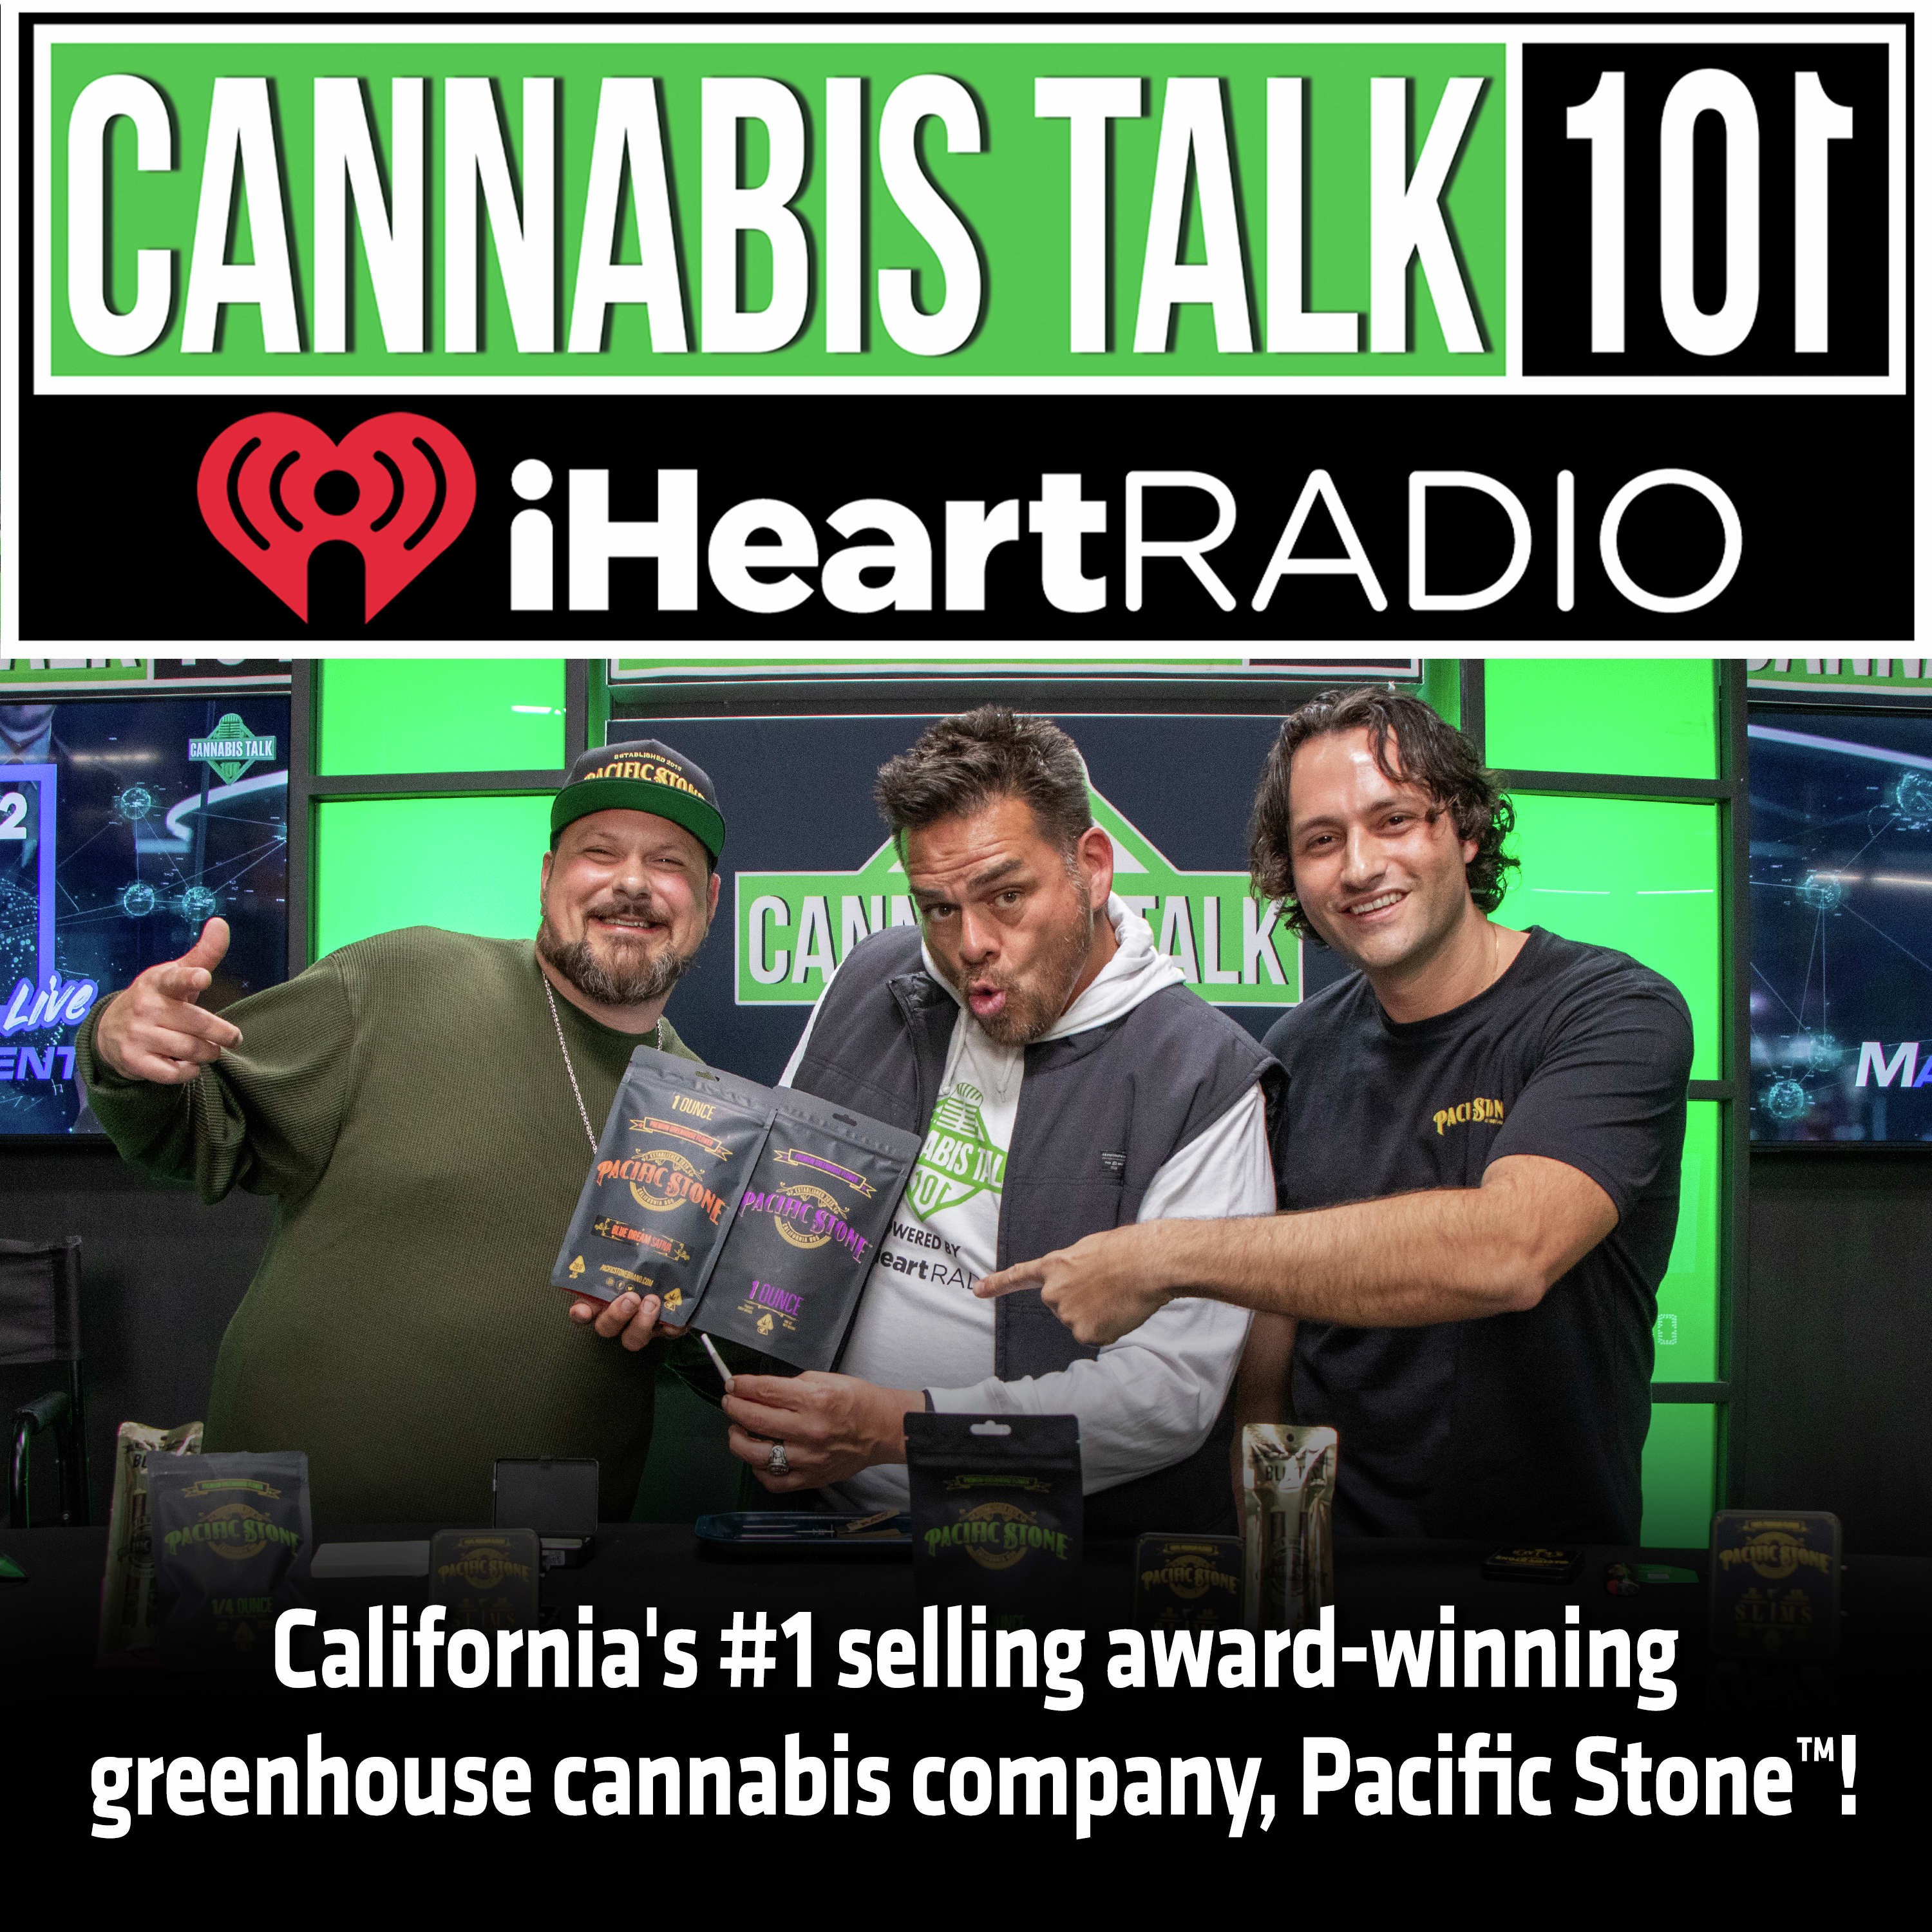 California's #1 selling award-winning greenhouse cannabis company, Pacific Stone™!